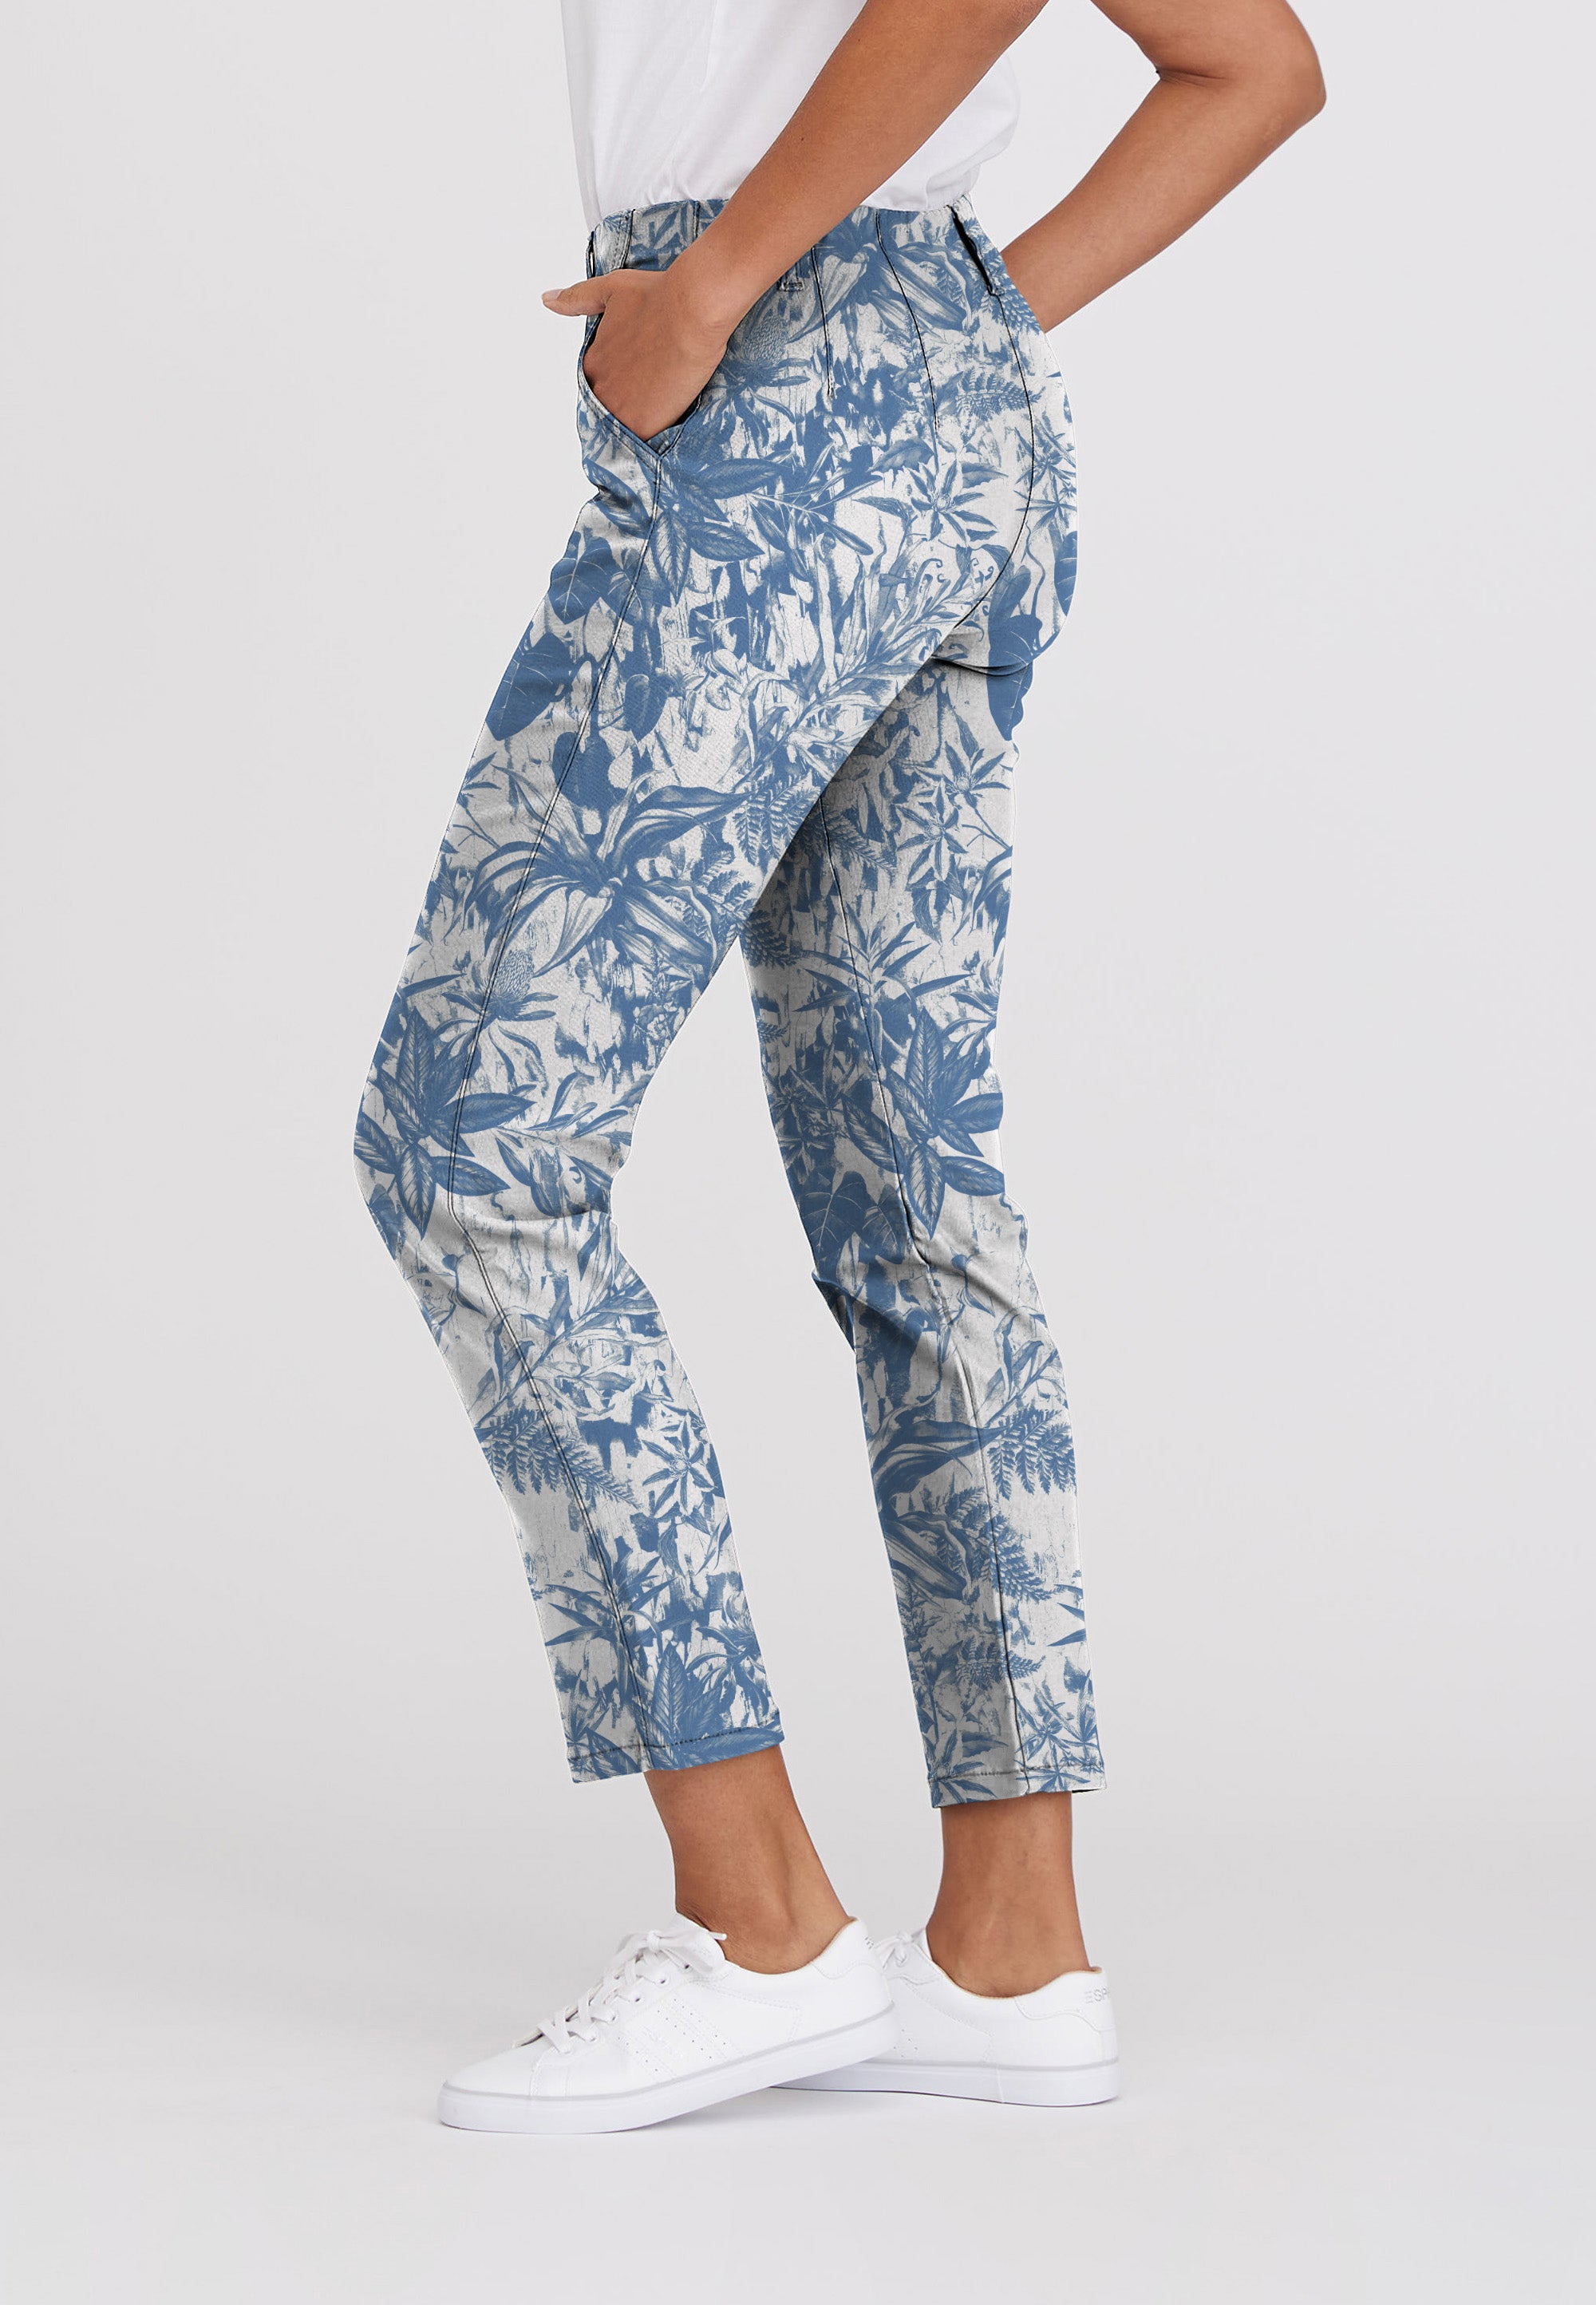 LAURIE  Taylor Regular - Short Length Trousers REGULAR 44110 Flower Print